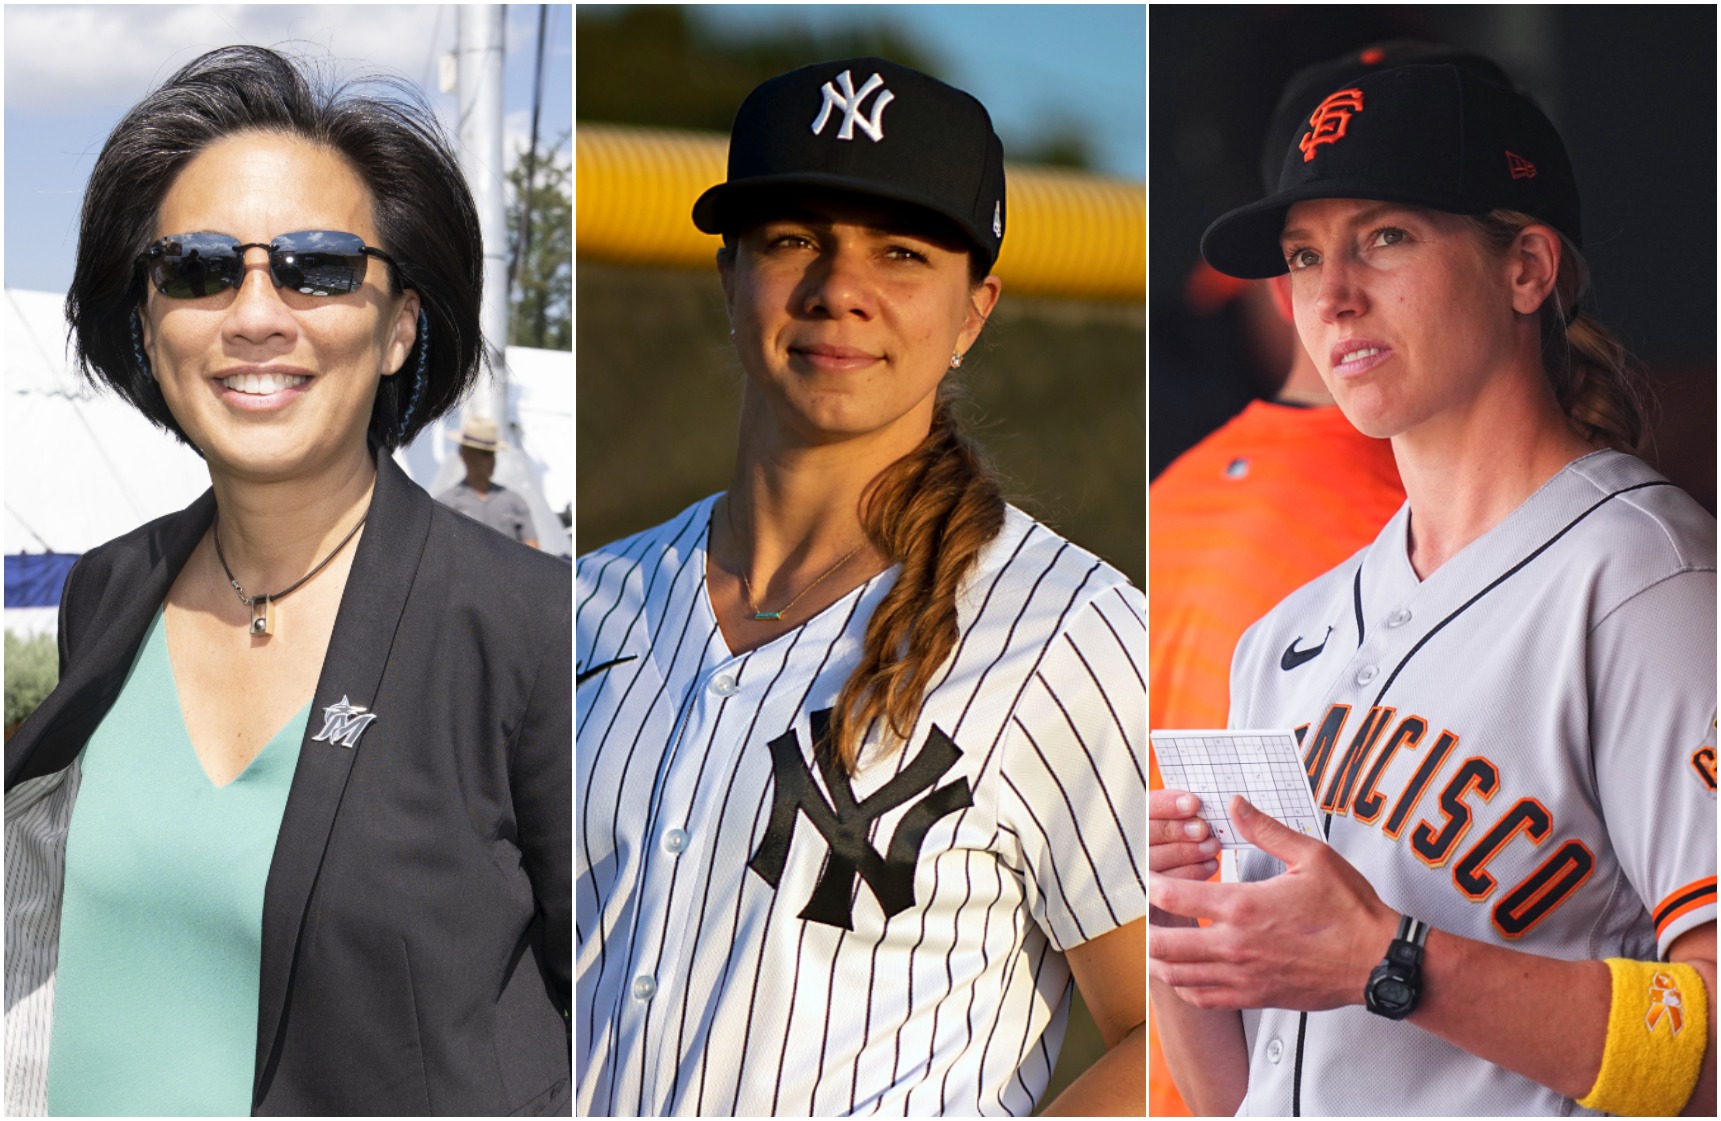 New York Yankees coach Rachel Balkovec is latest woman to make